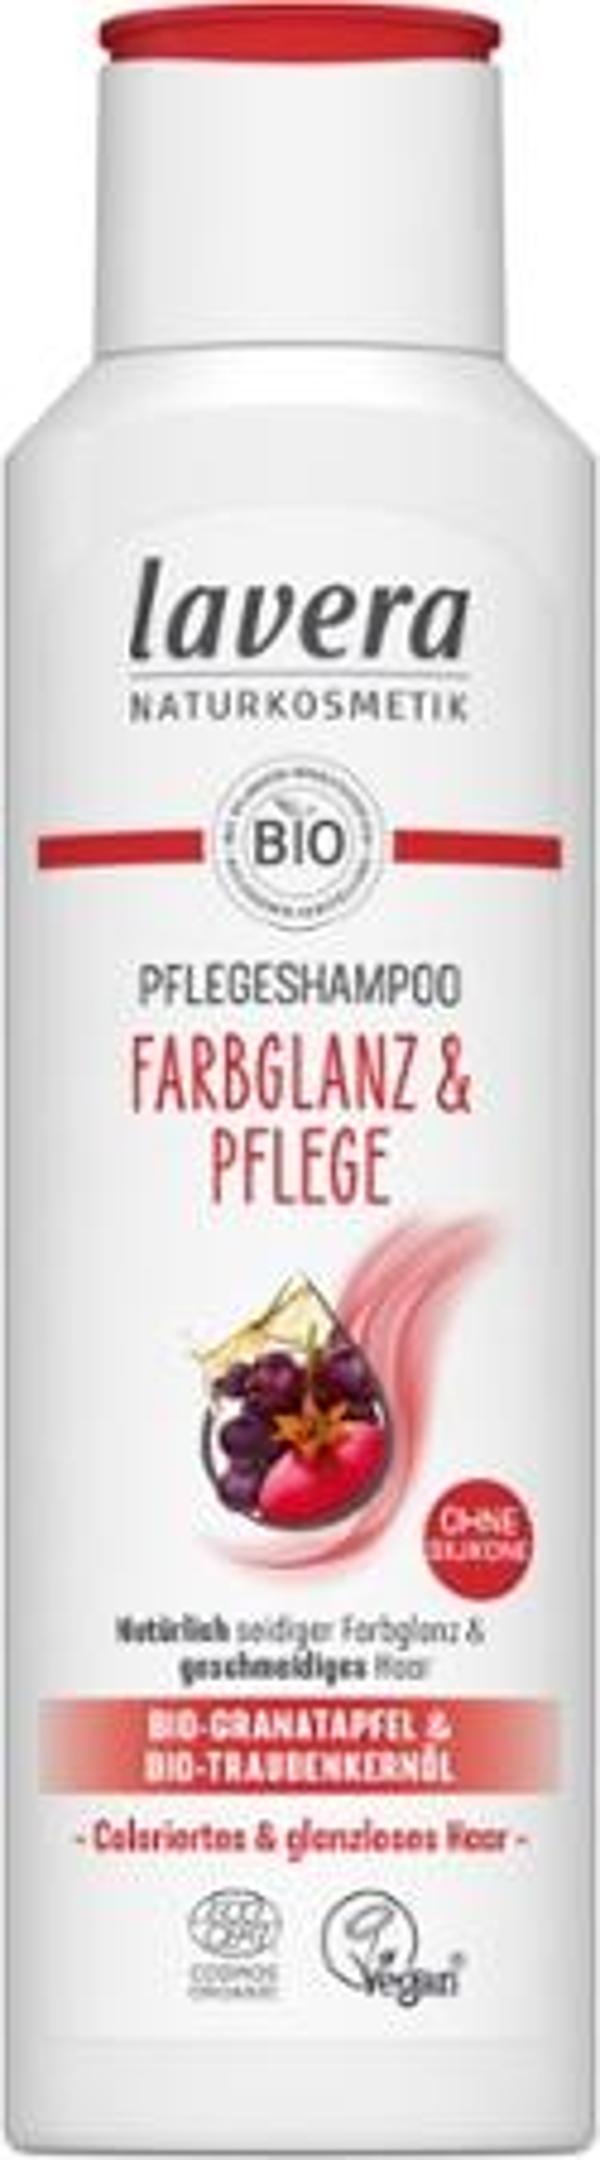 Produktfoto zu Farbglanz & Pflegeshampoo, 250 ml